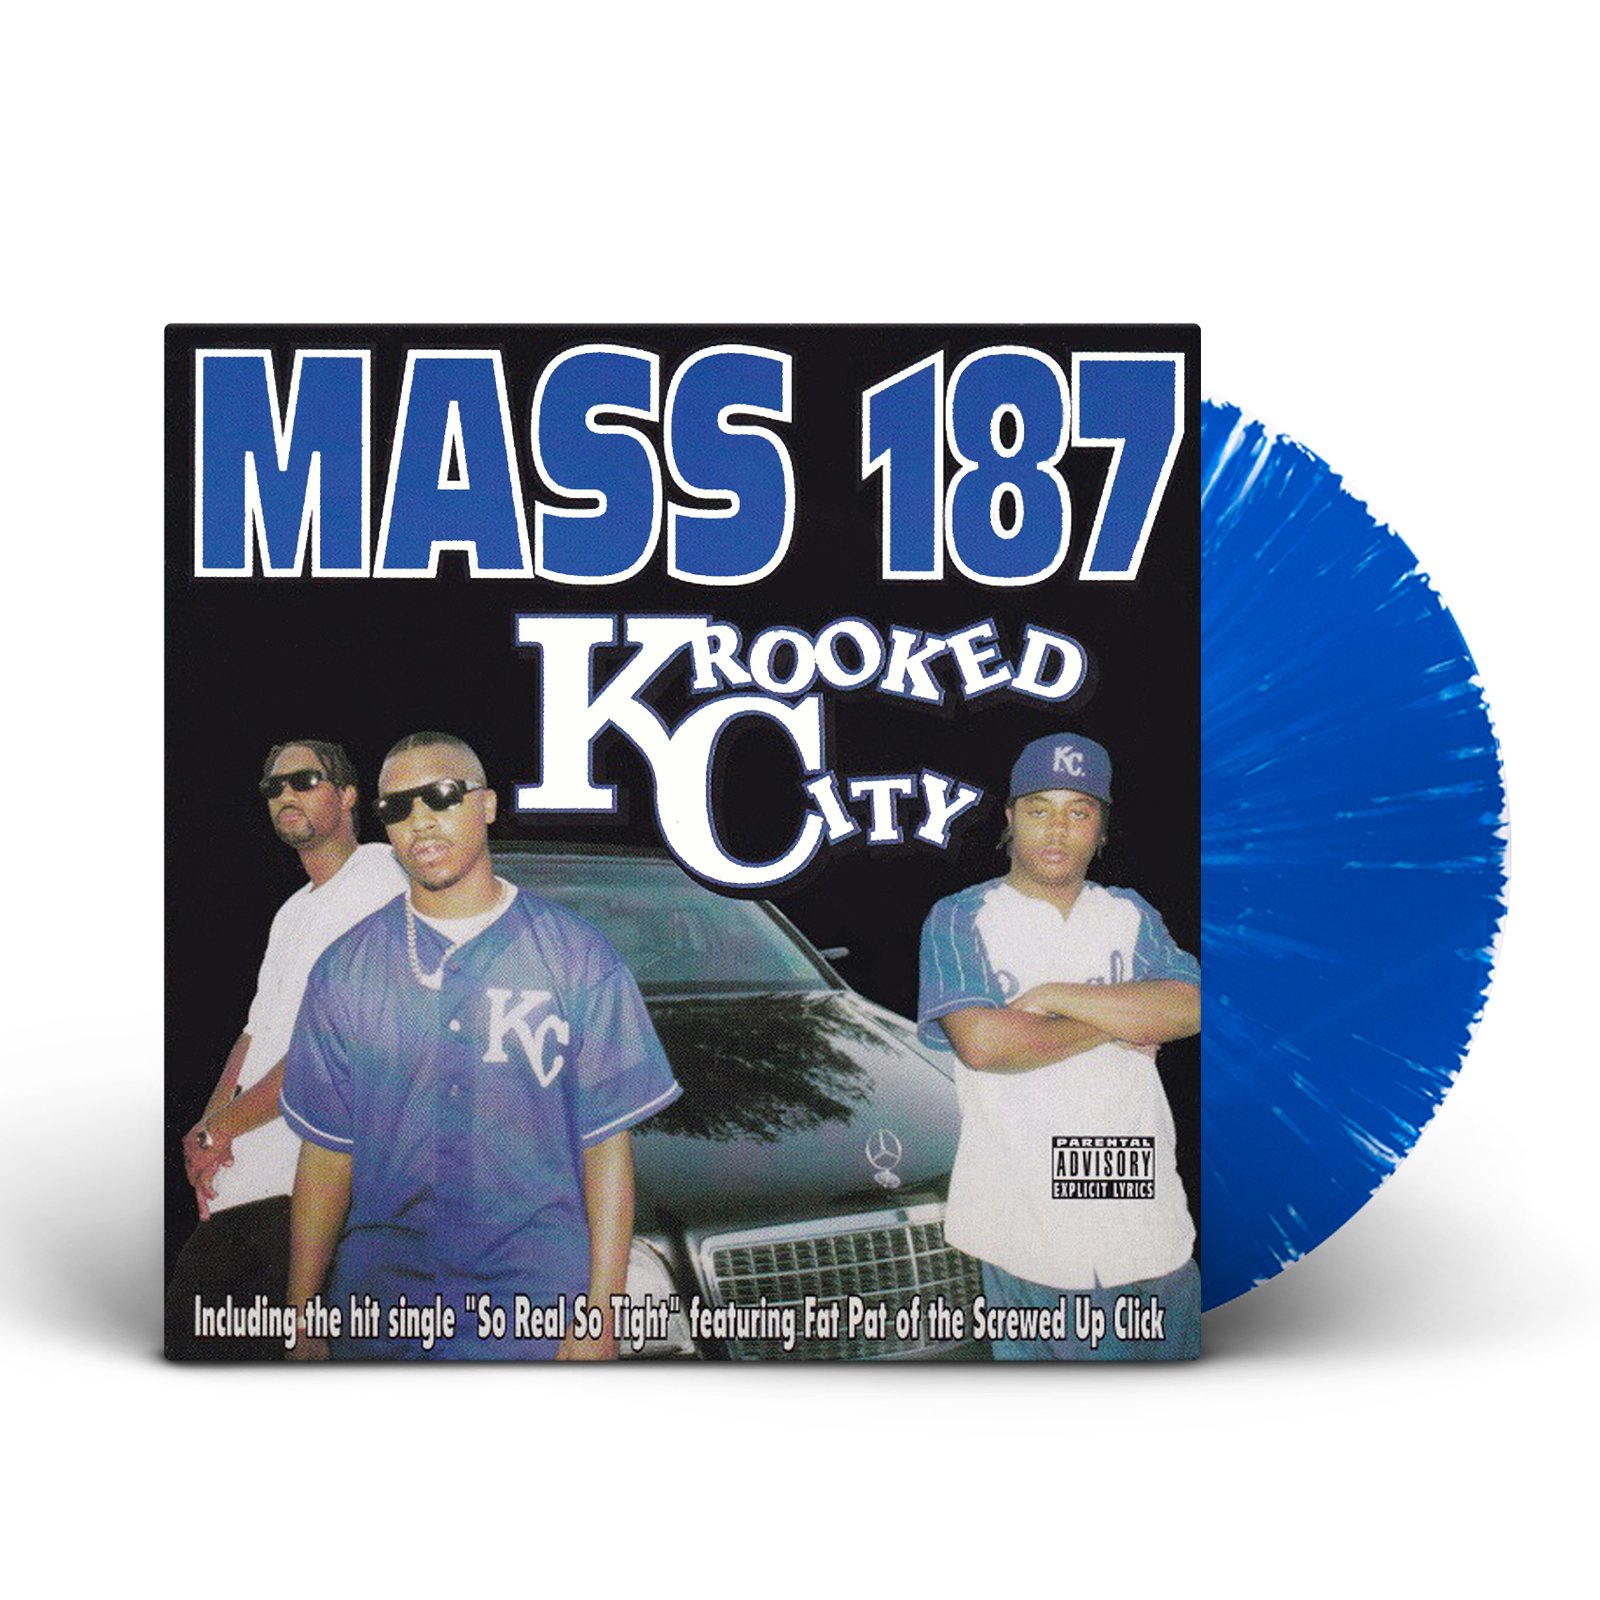 Mass 187 - Krooked City Vinyl